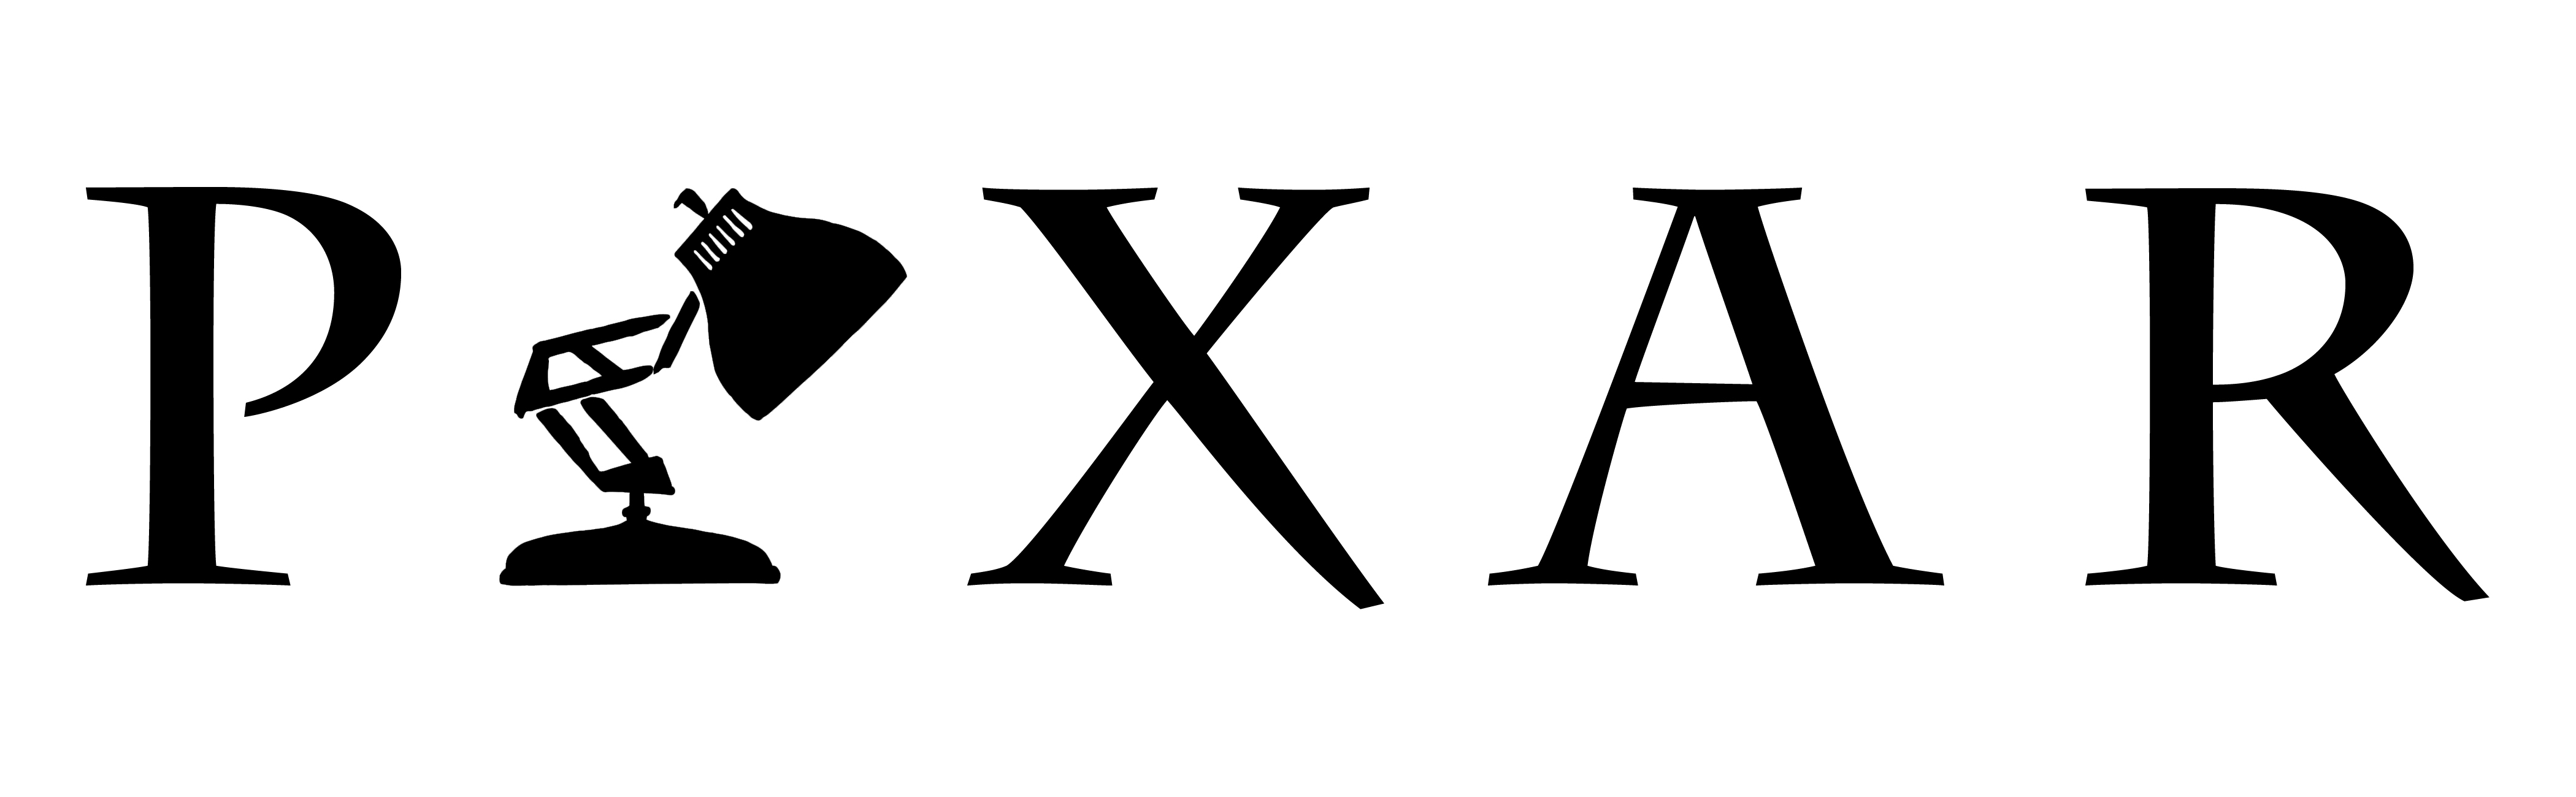 Pixar Logo Pixar Symbol Meaning History And Evolution Of Technology ...